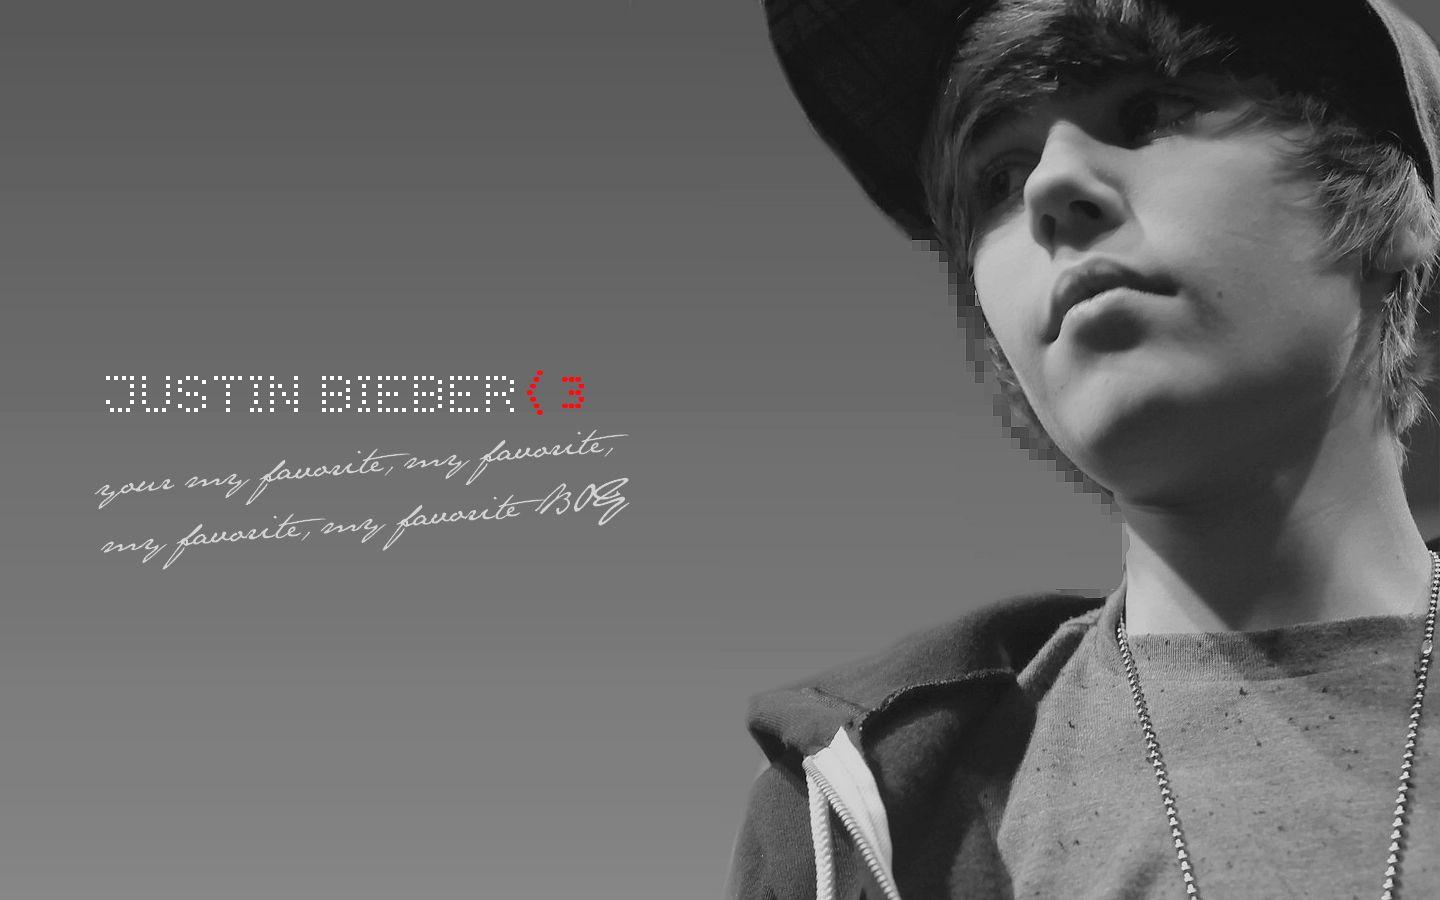 Download the Justin bieber Love Wallpaper, Justin bieber Love